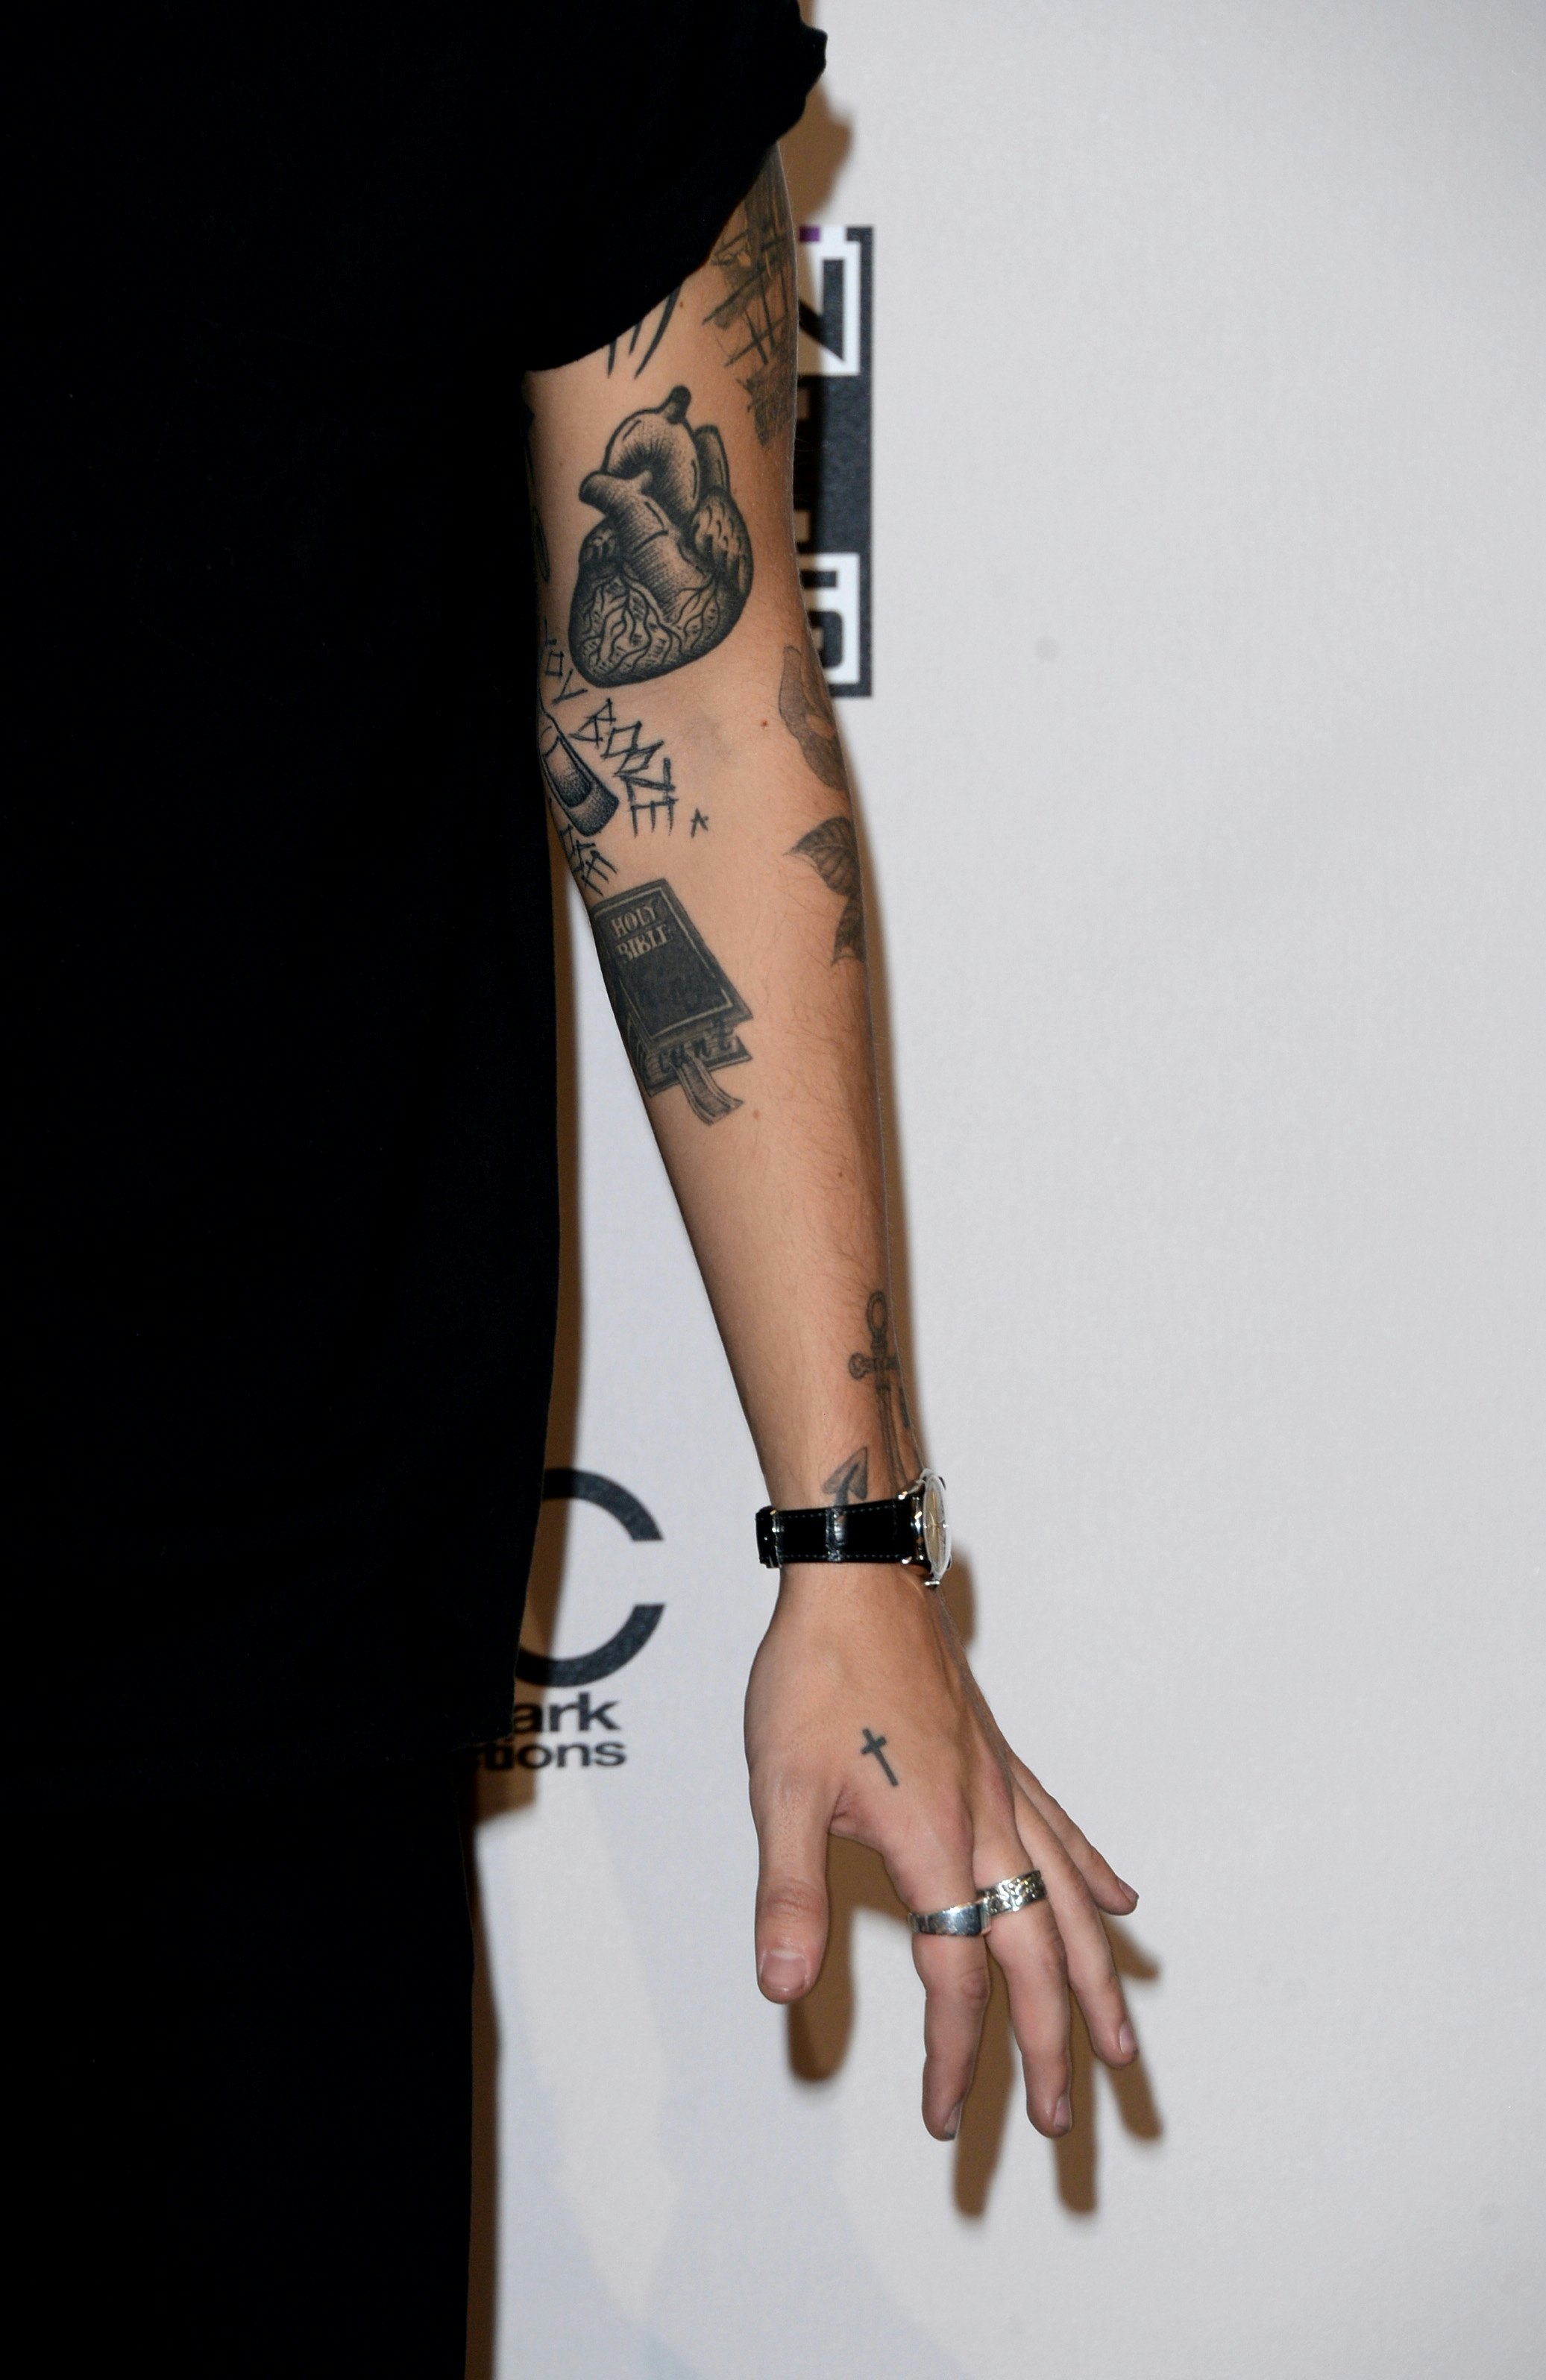 Harry Styles' 55 Tattoos & Their Meanings - Body Art Guru